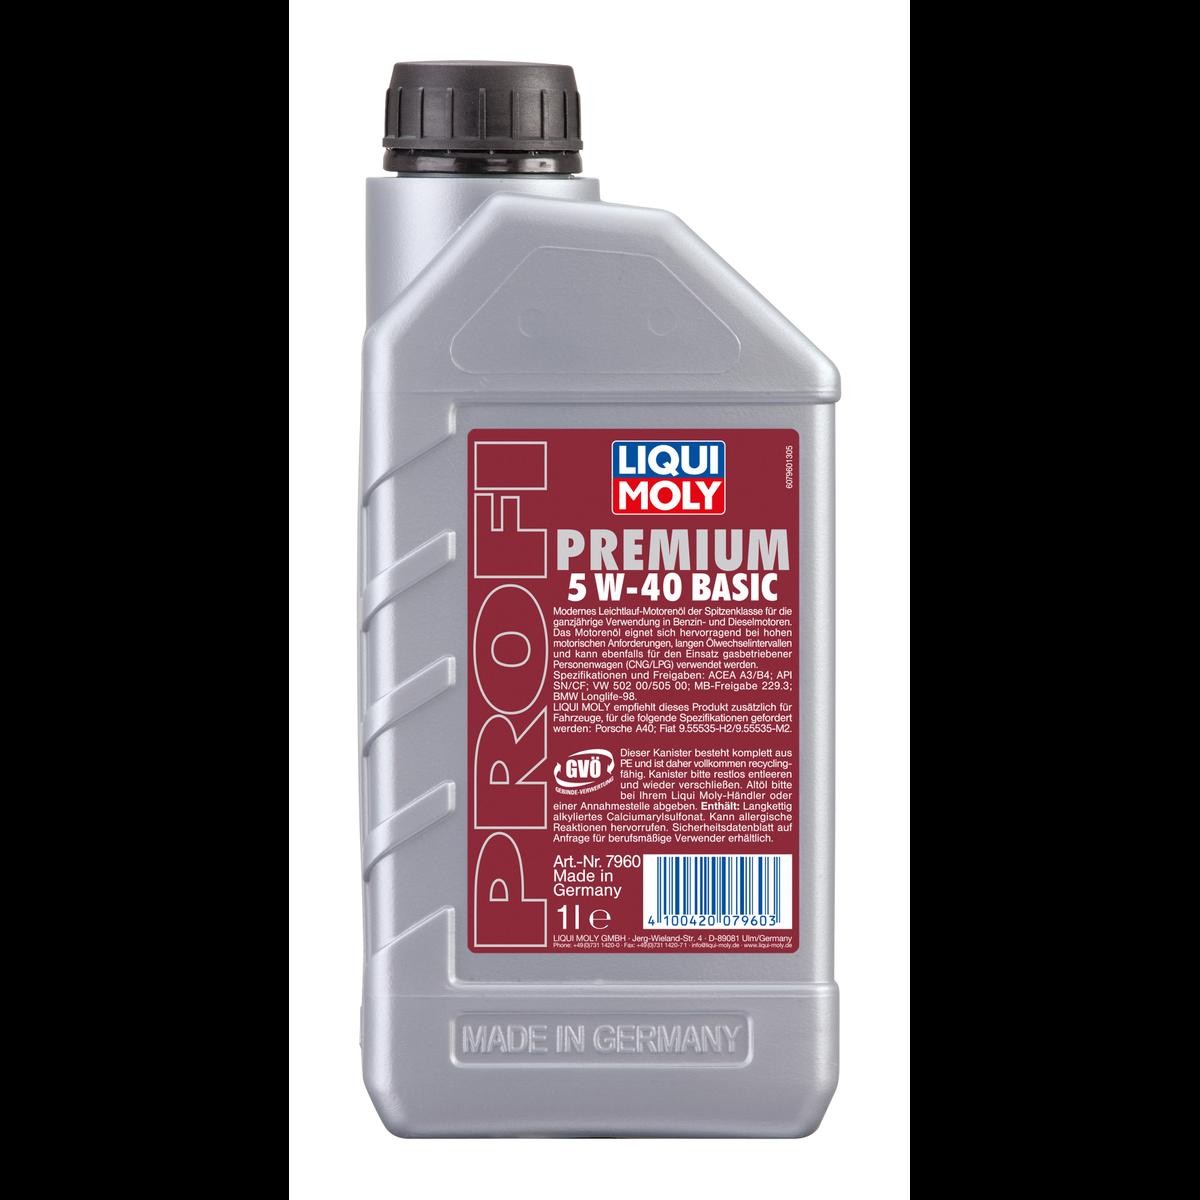 LIQUI MOLY Profi Premium, Basic 7960 Engine oil 5W-40, 1l, Synthetic Oil